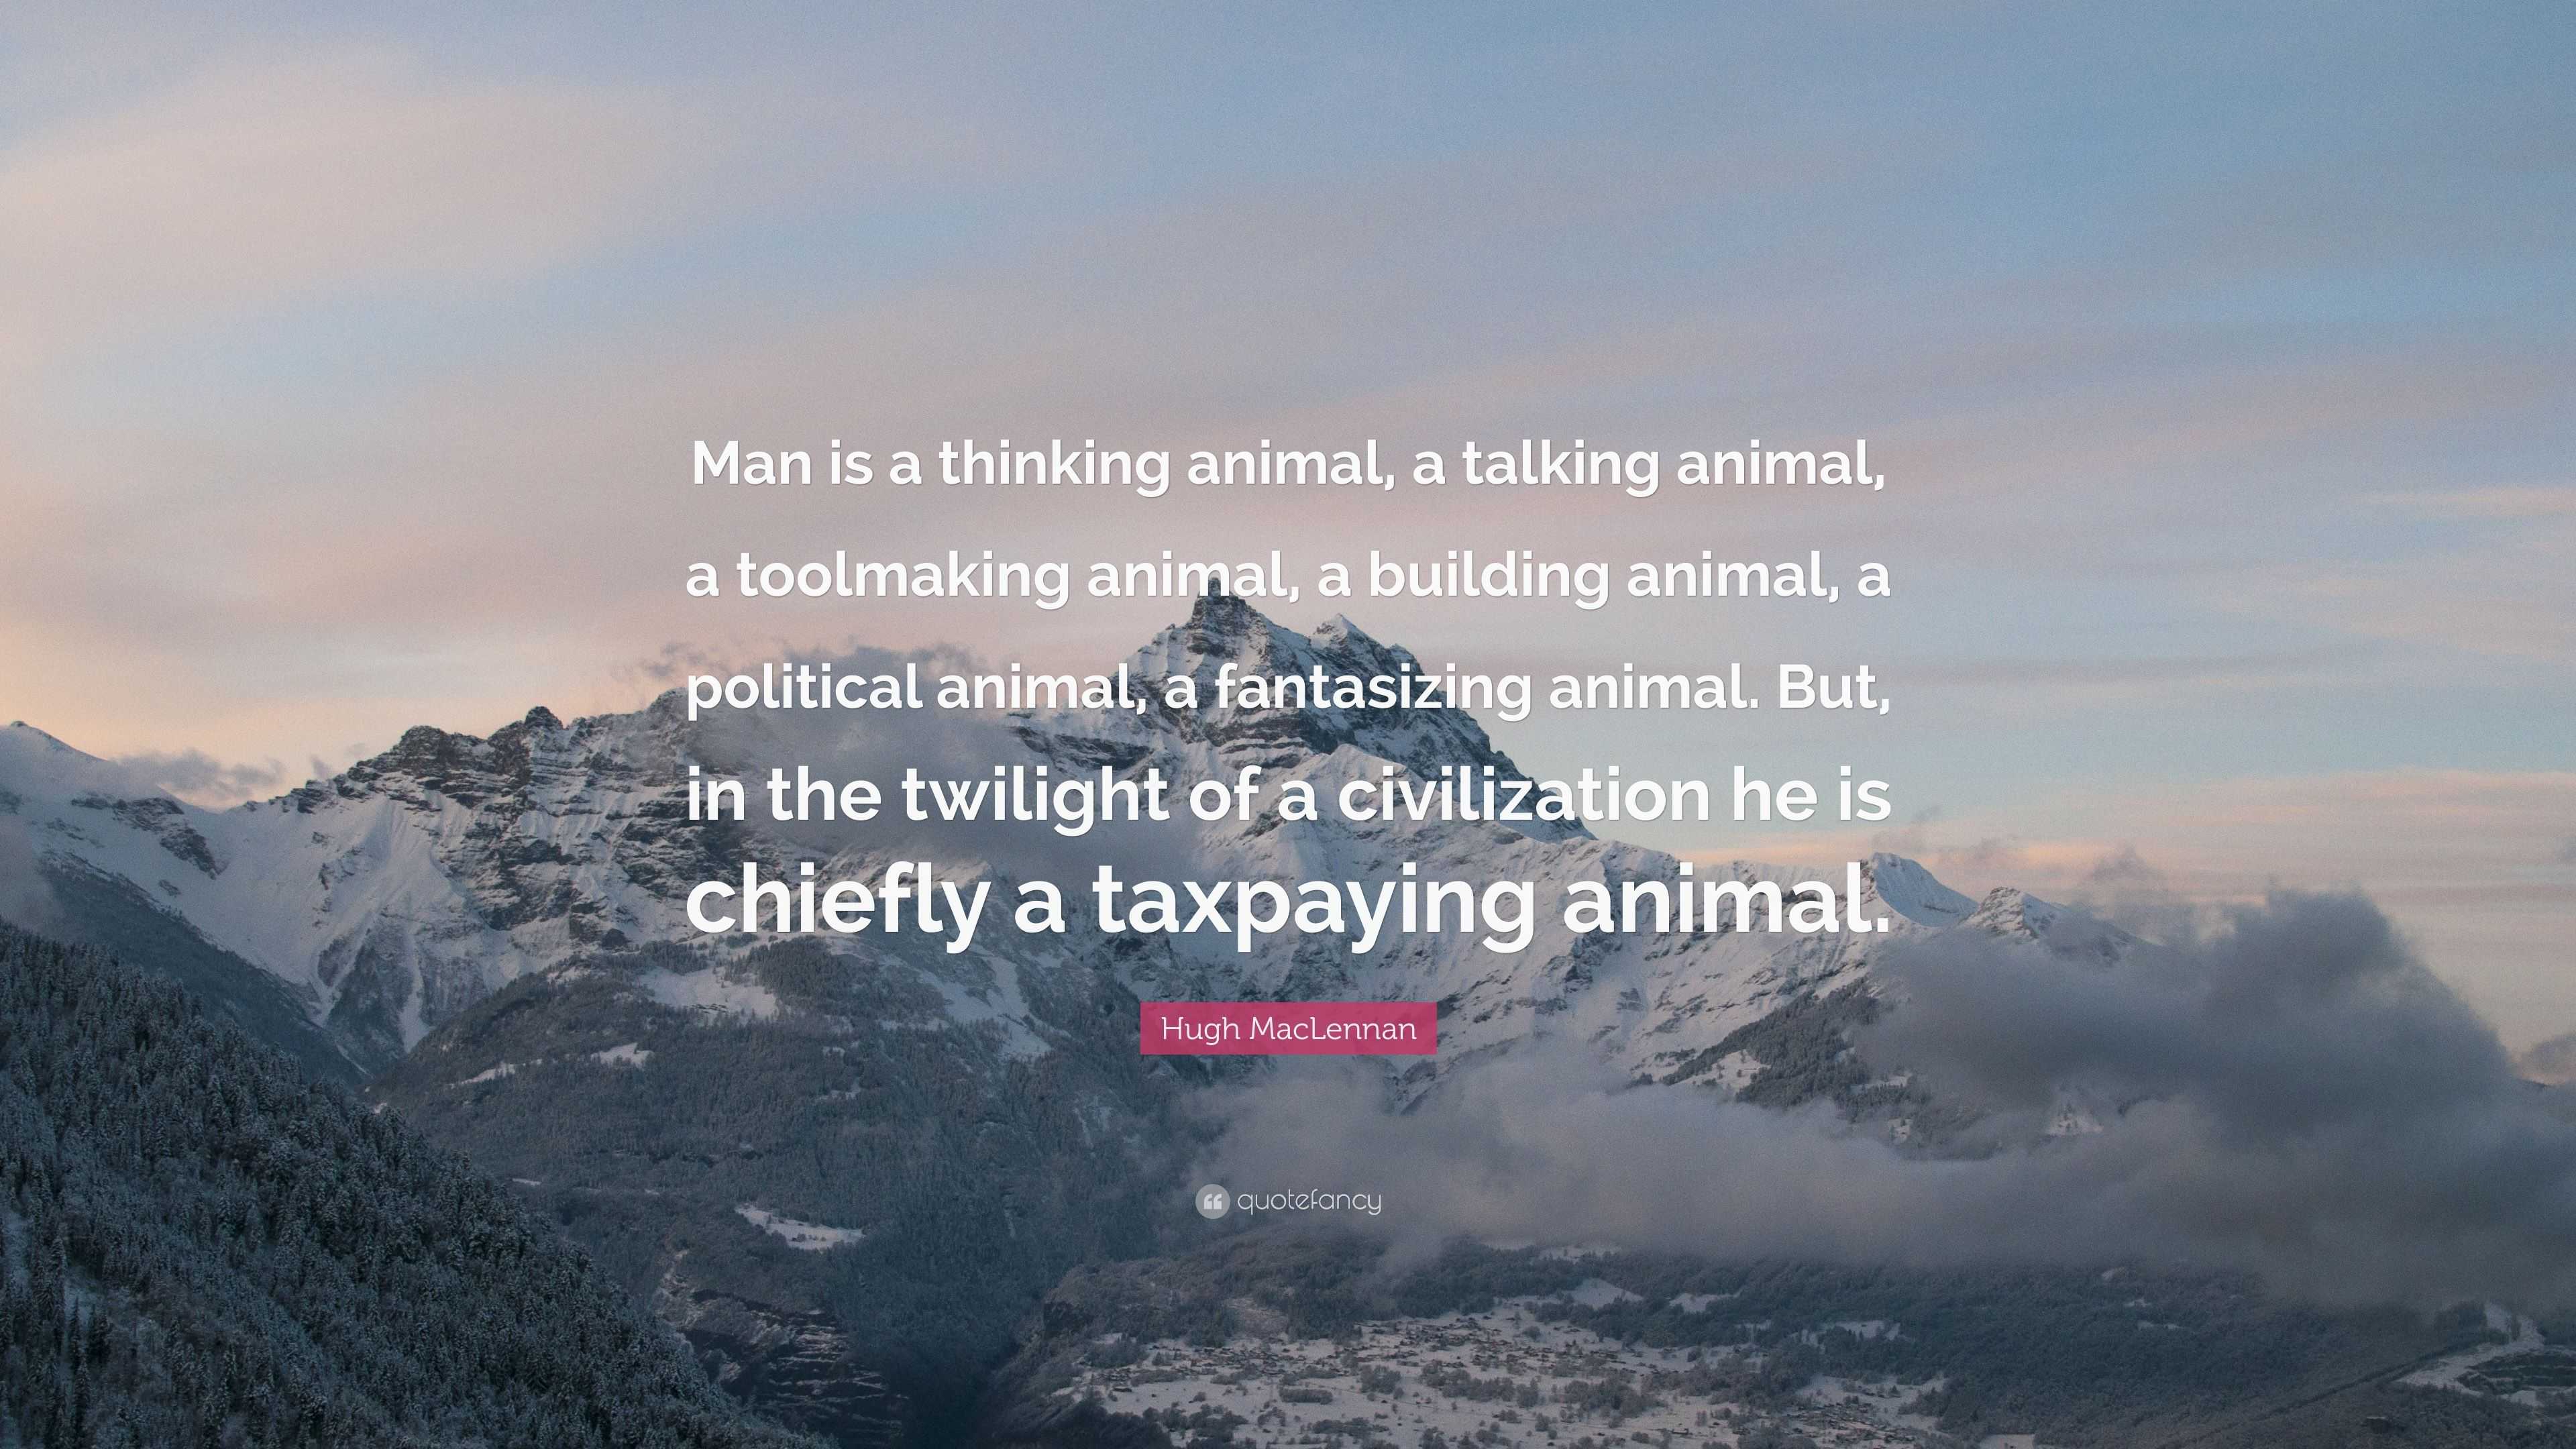 Hugh MacLennan Quote: “Man is a thinking animal, a talking animal, a  toolmaking animal, a building animal, a political animal, a fantasizing  an...”